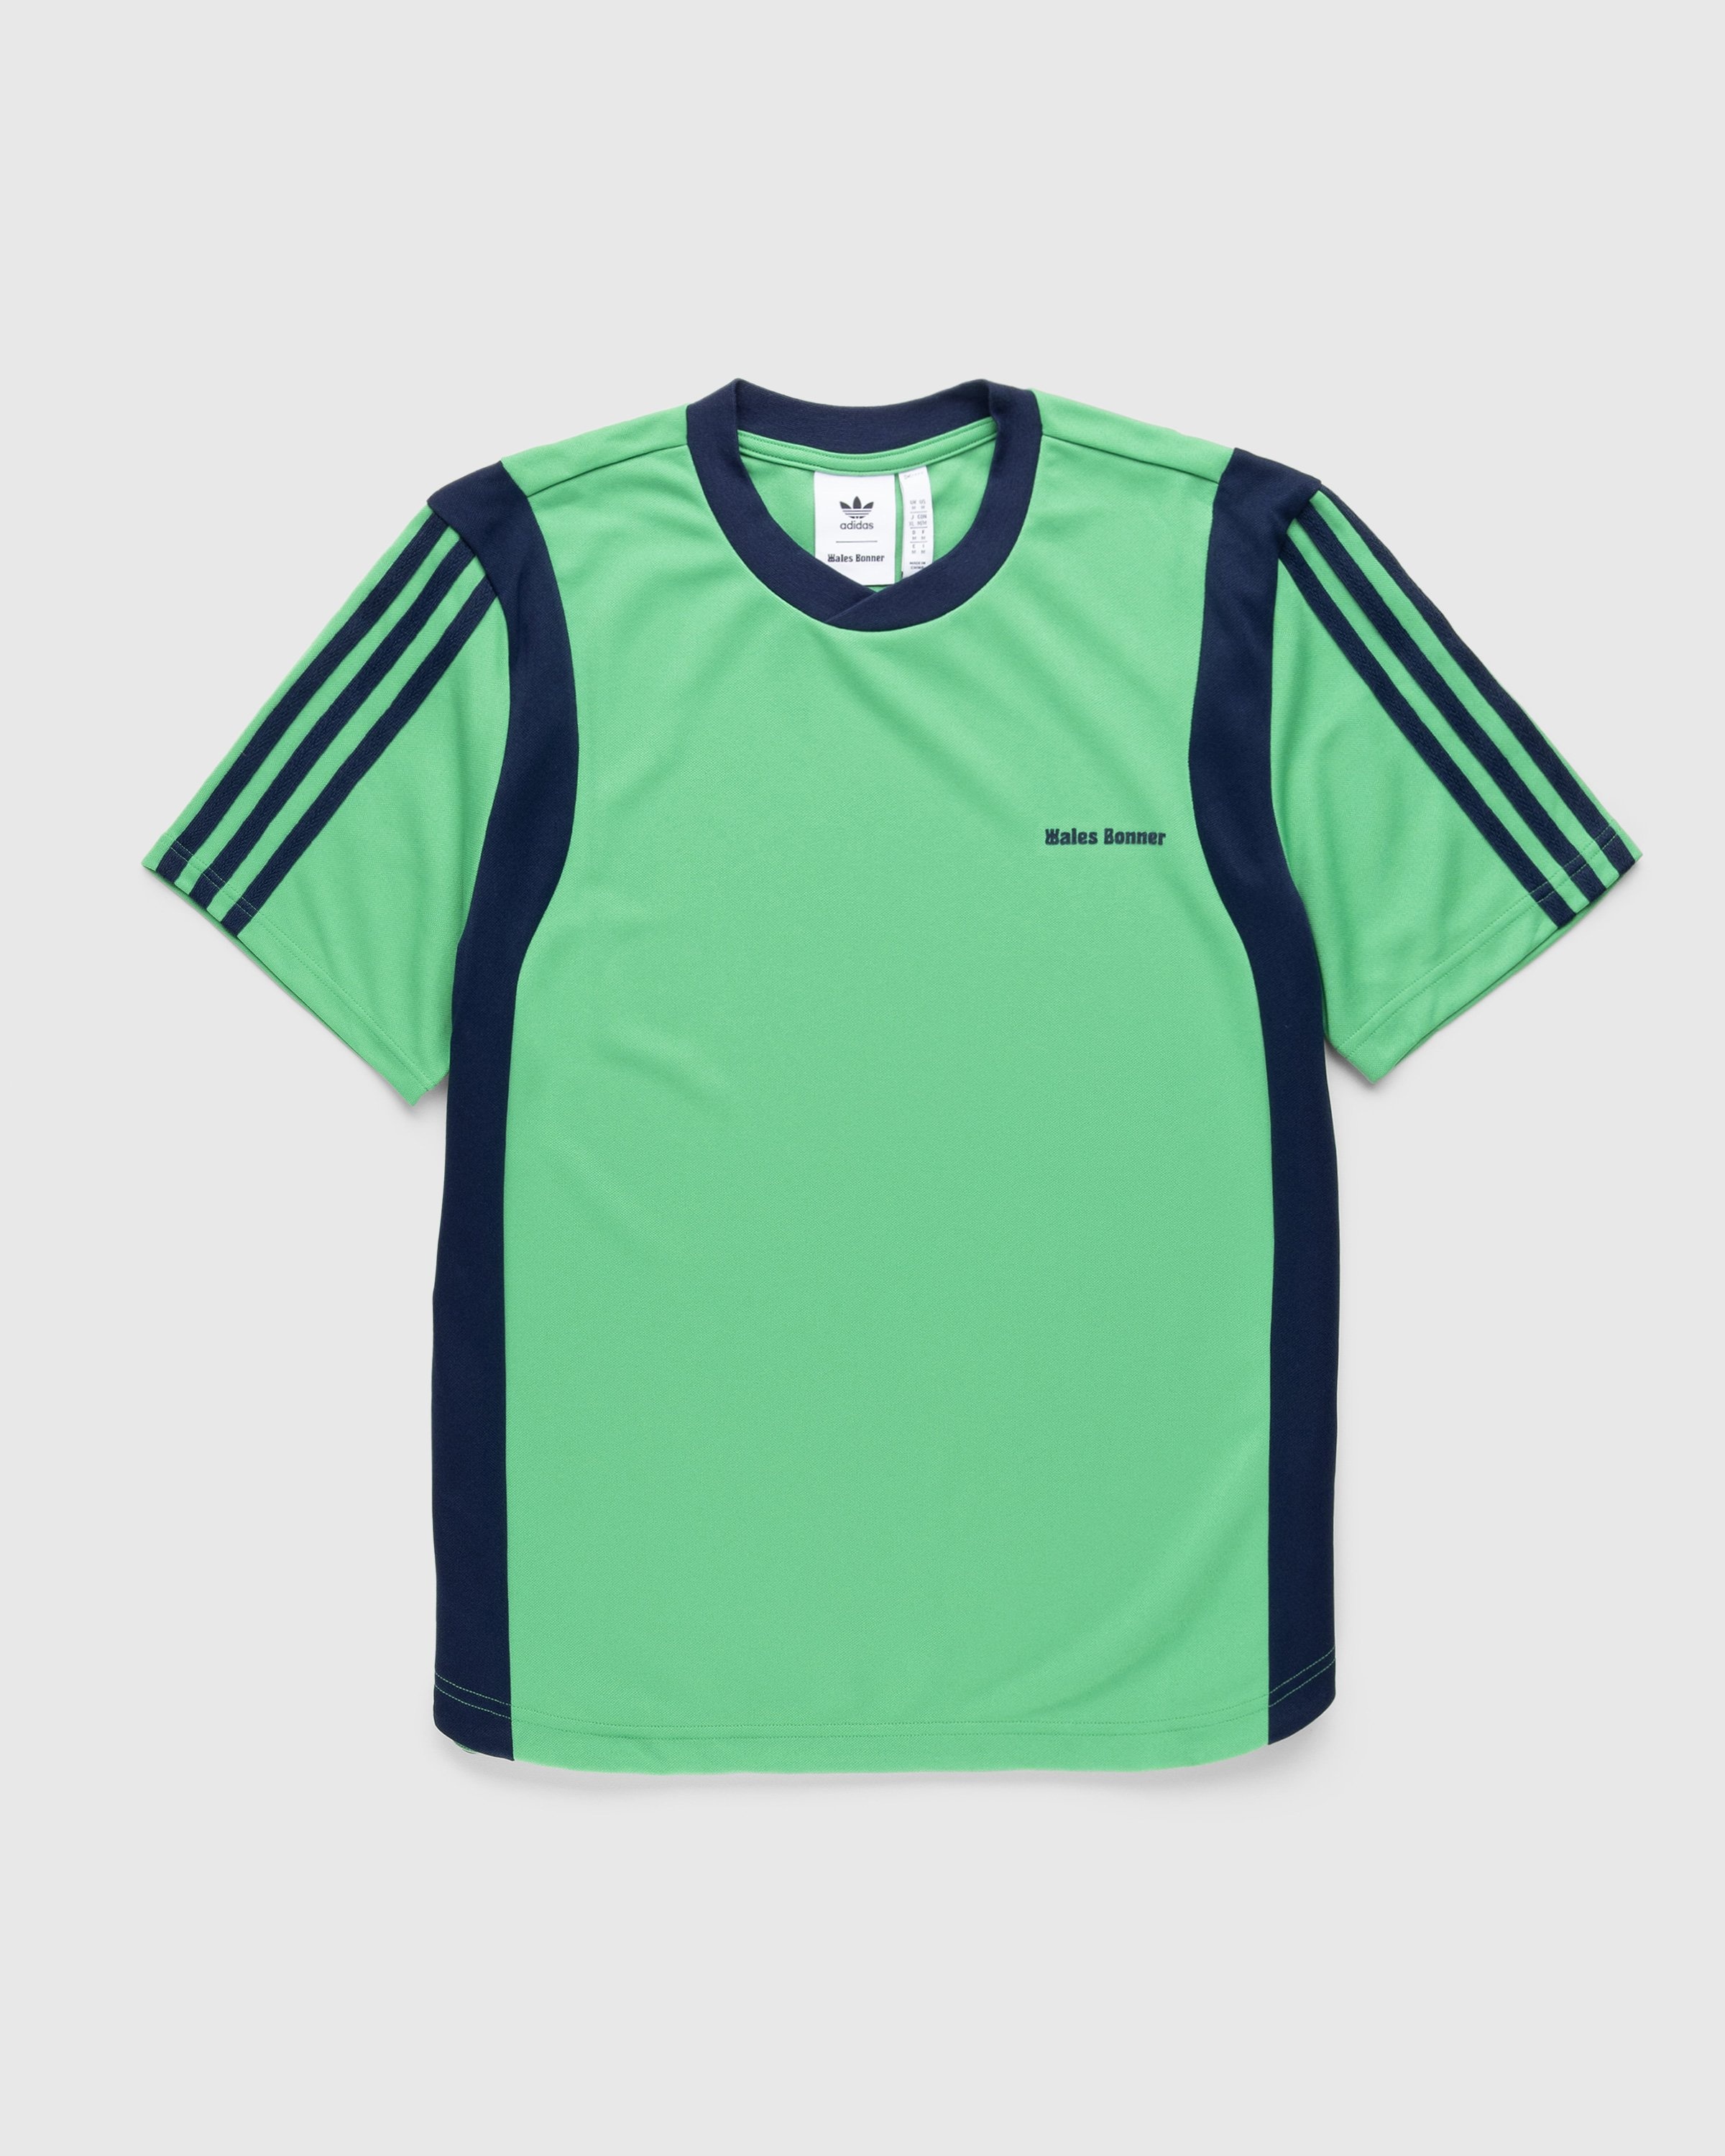 Adidas x Wales Bonner  Soccer T-Shirt